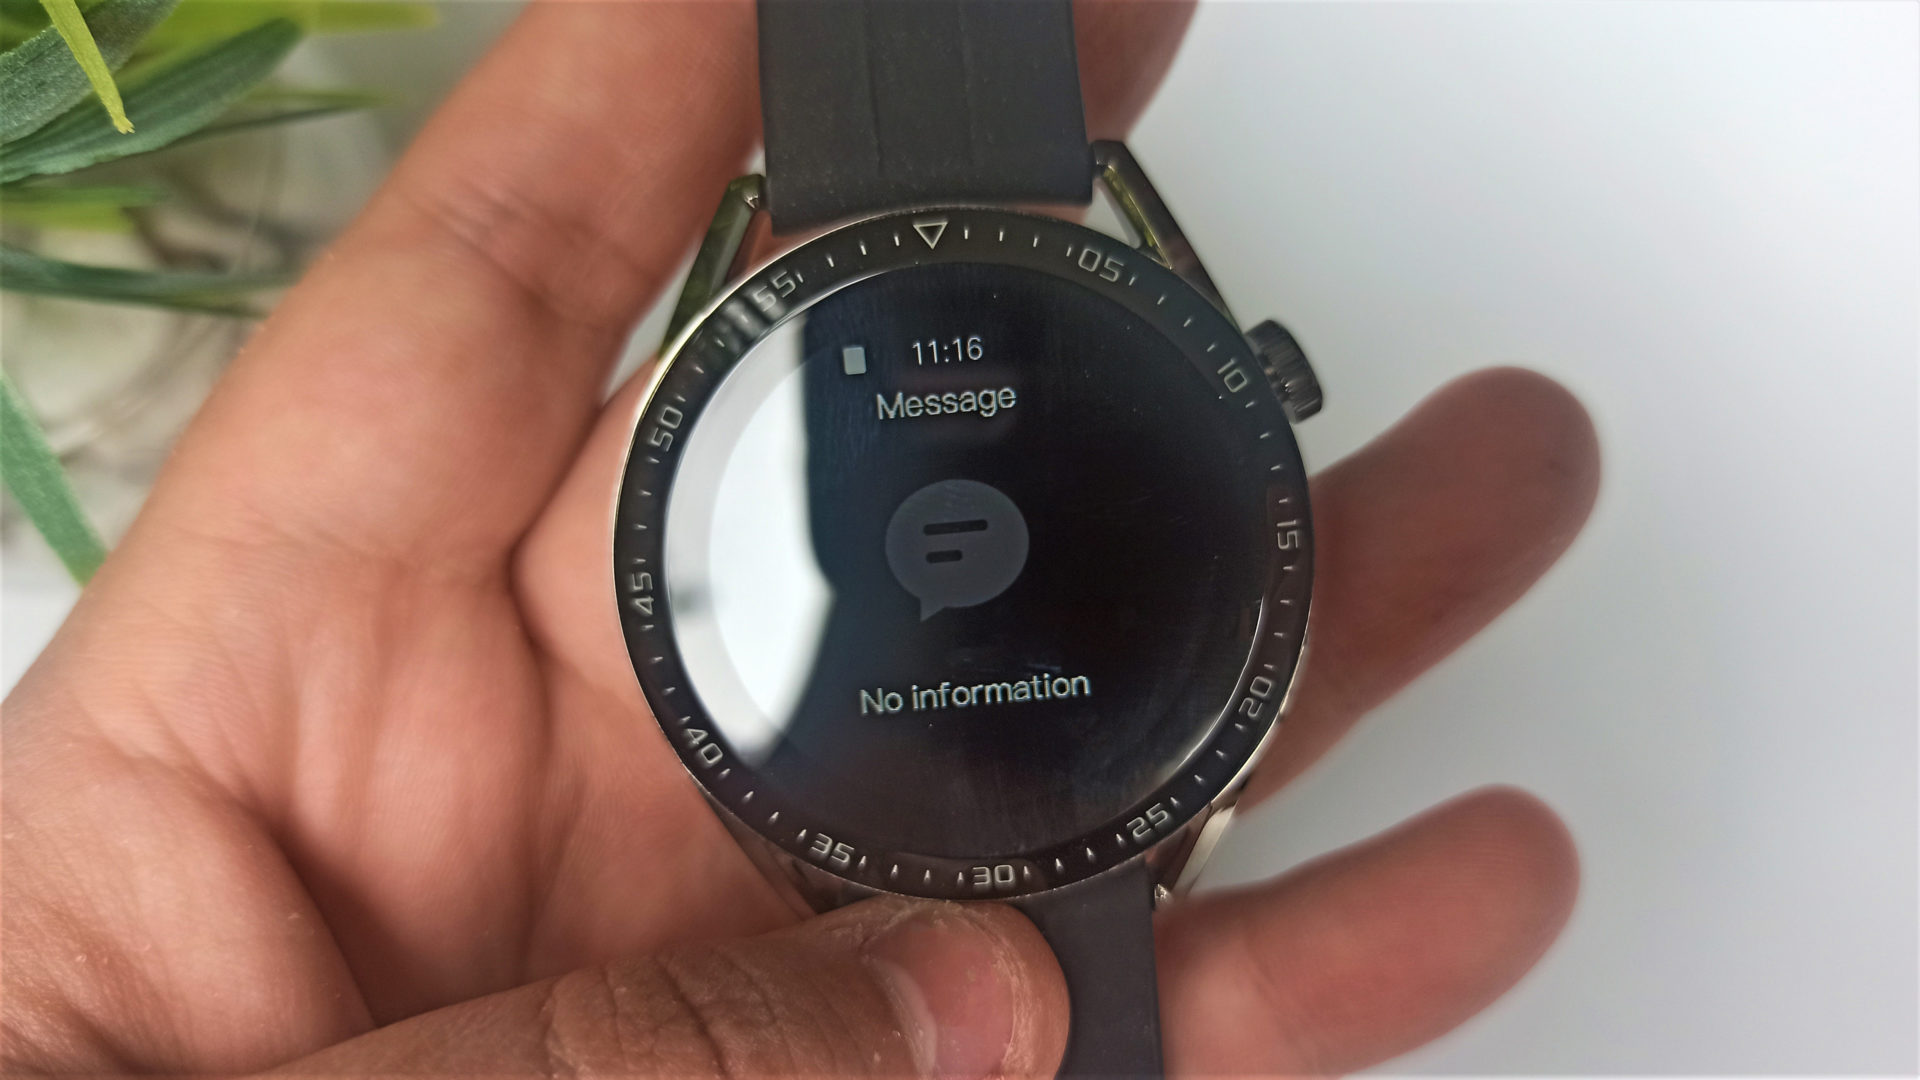 HW28 Smartwatch Review